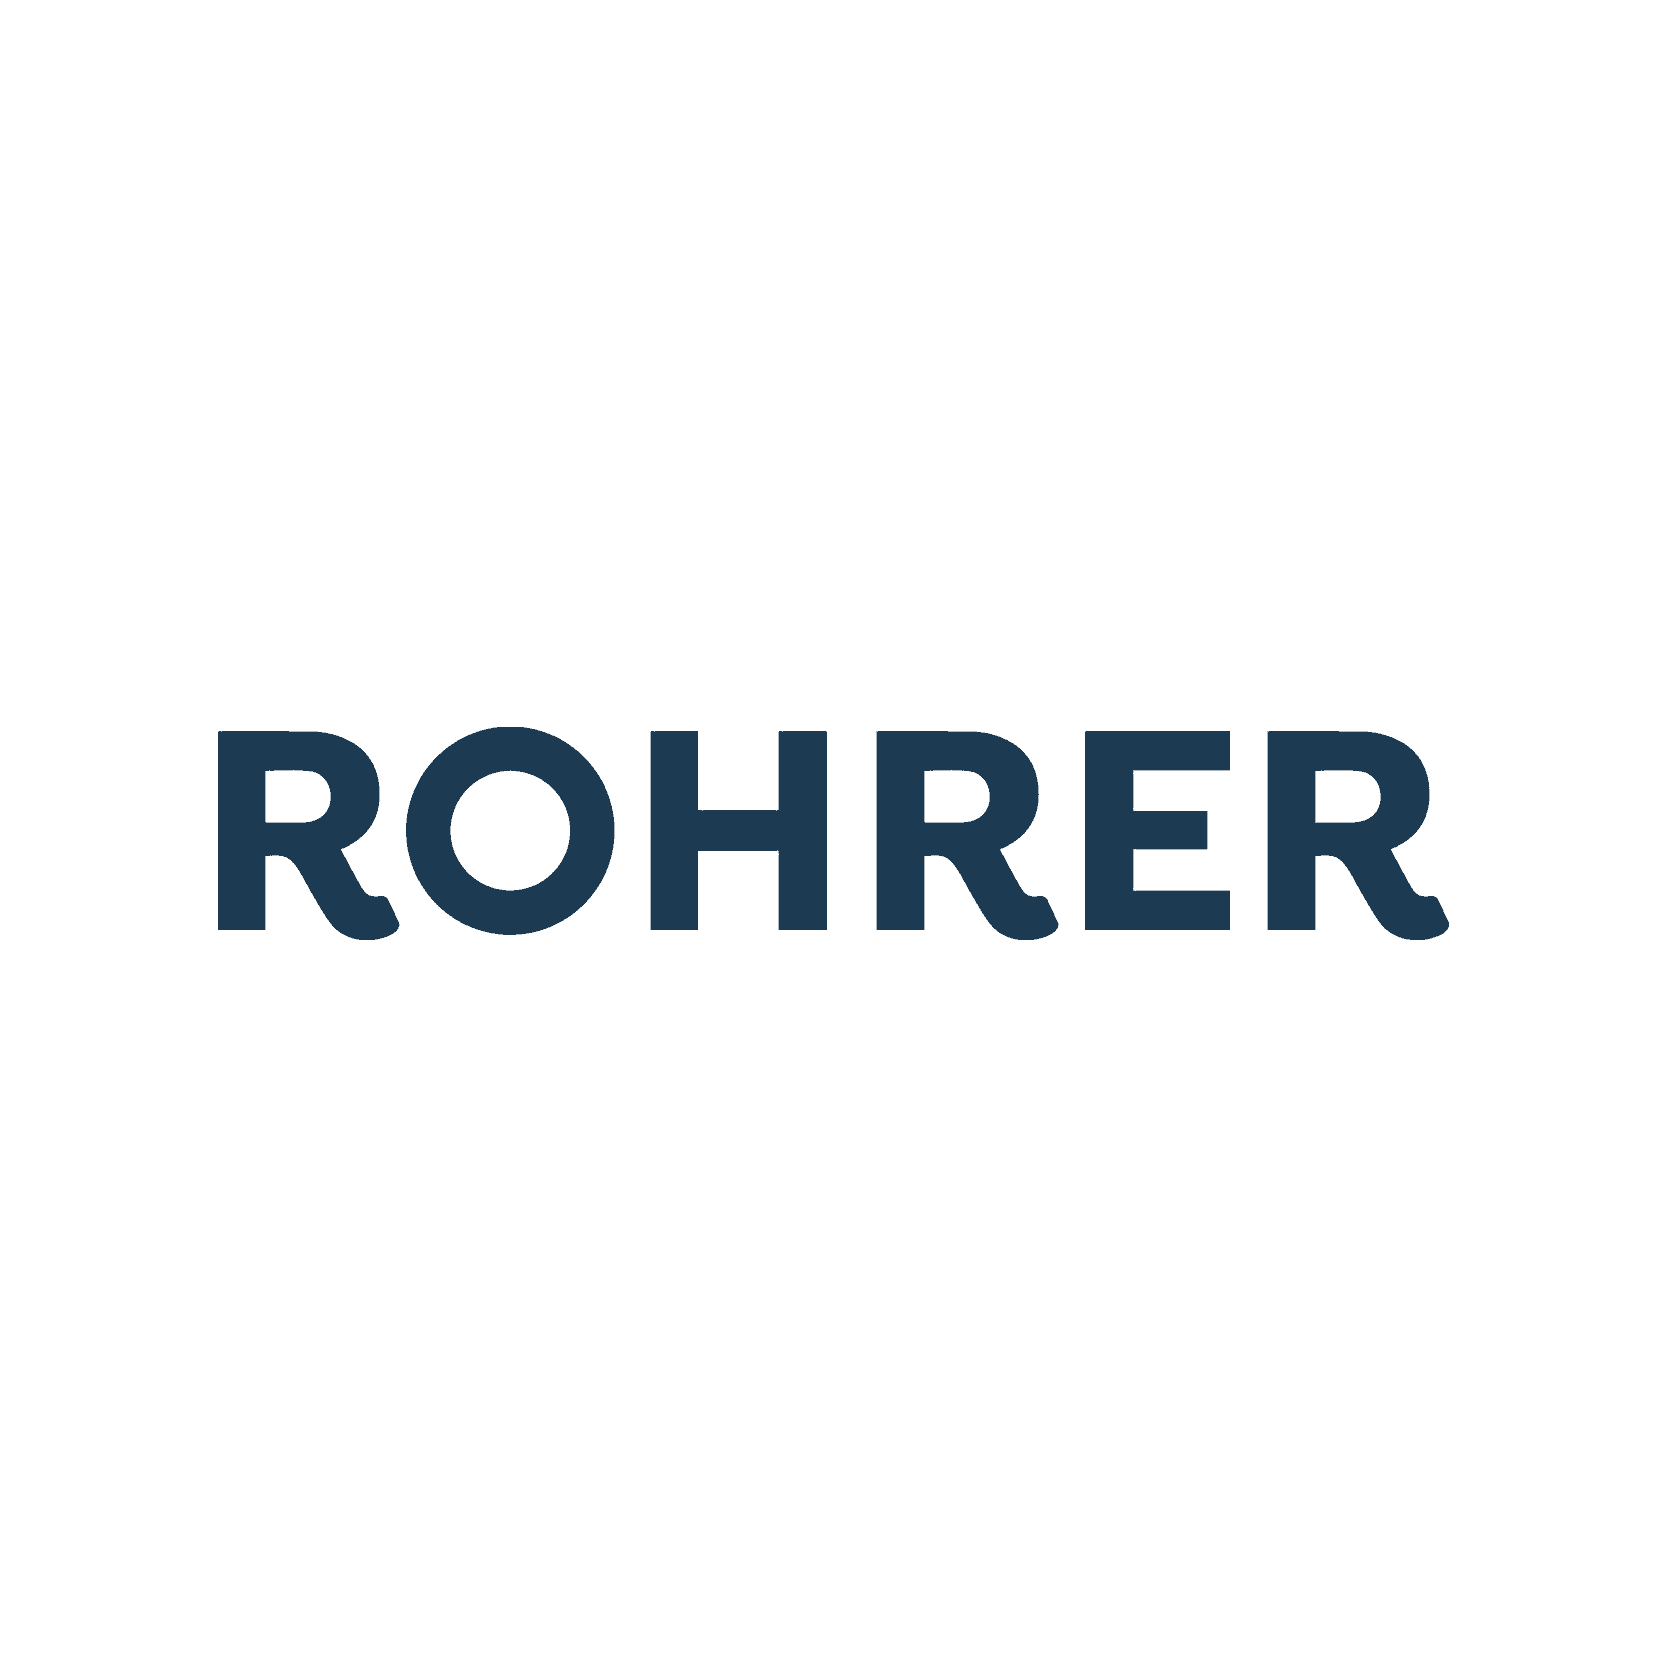 rohrer Sanitär und Haustechnik GmbH